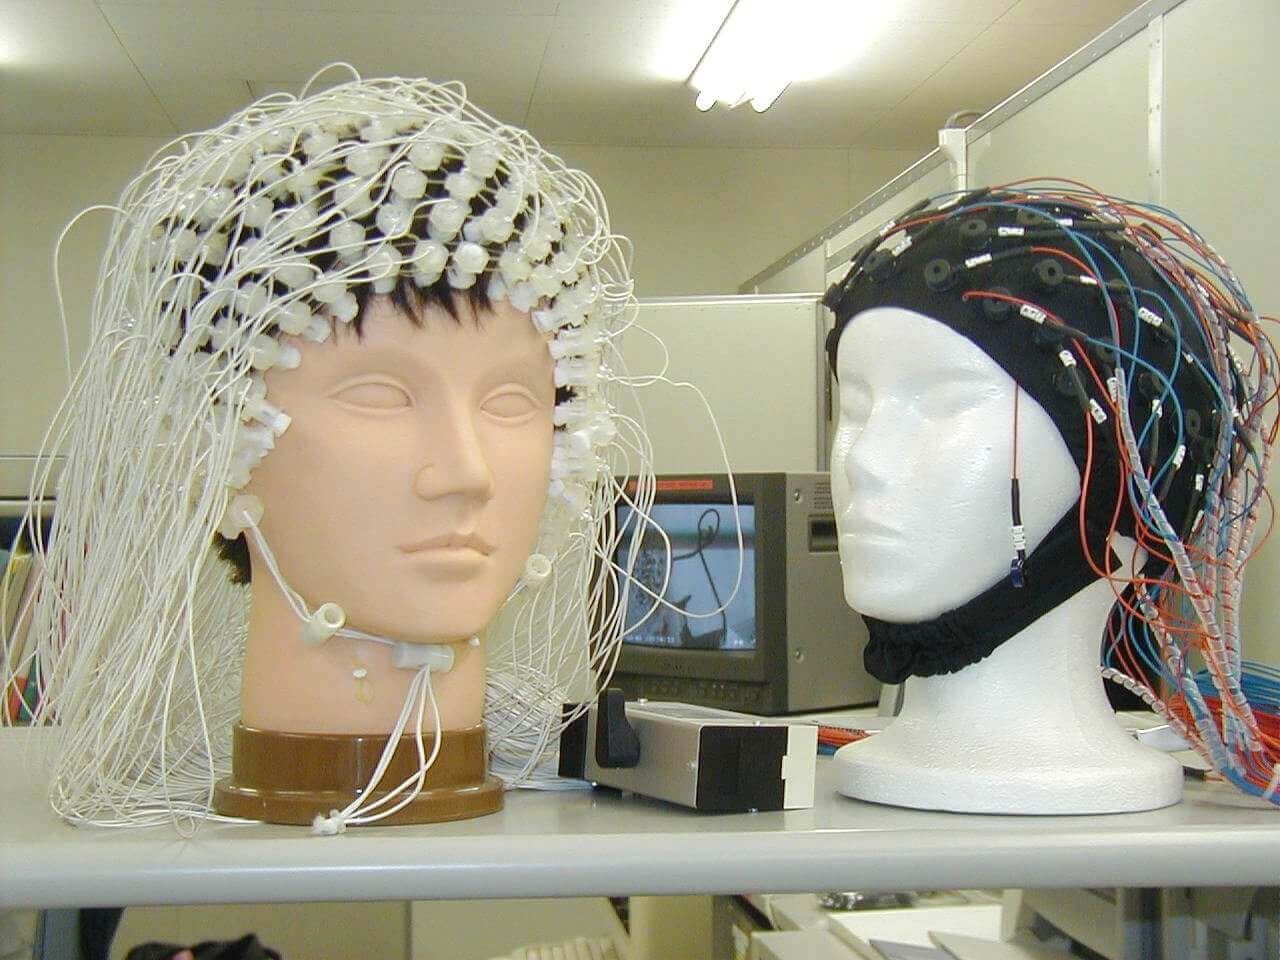 Ээг тольятти. ЭЭГ головного мозга электроды. Электродная шапочка для ЭЭГ. Шлем для ЭЭГ Нейрософт. Электроэнцефалография головного мозга (ЭЭГ).